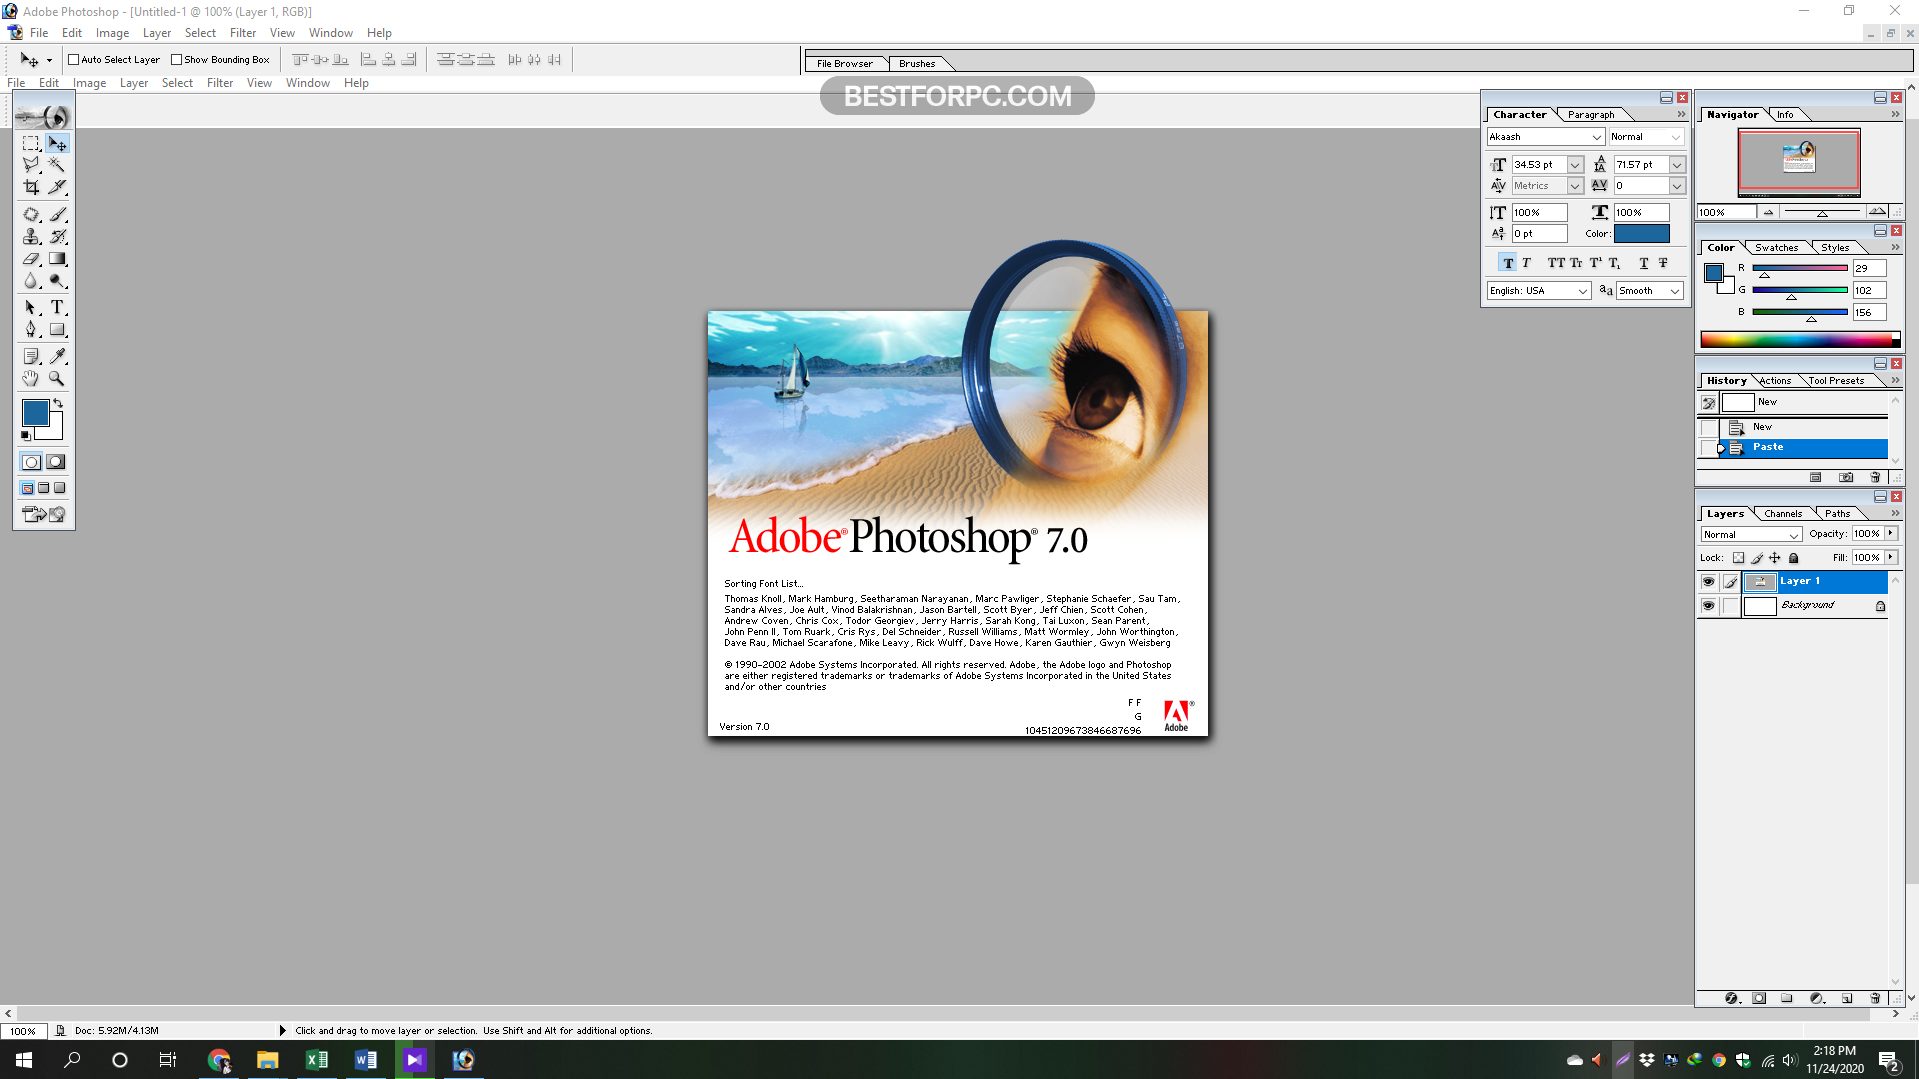 adobe photoshop 7.0 download free windows 8